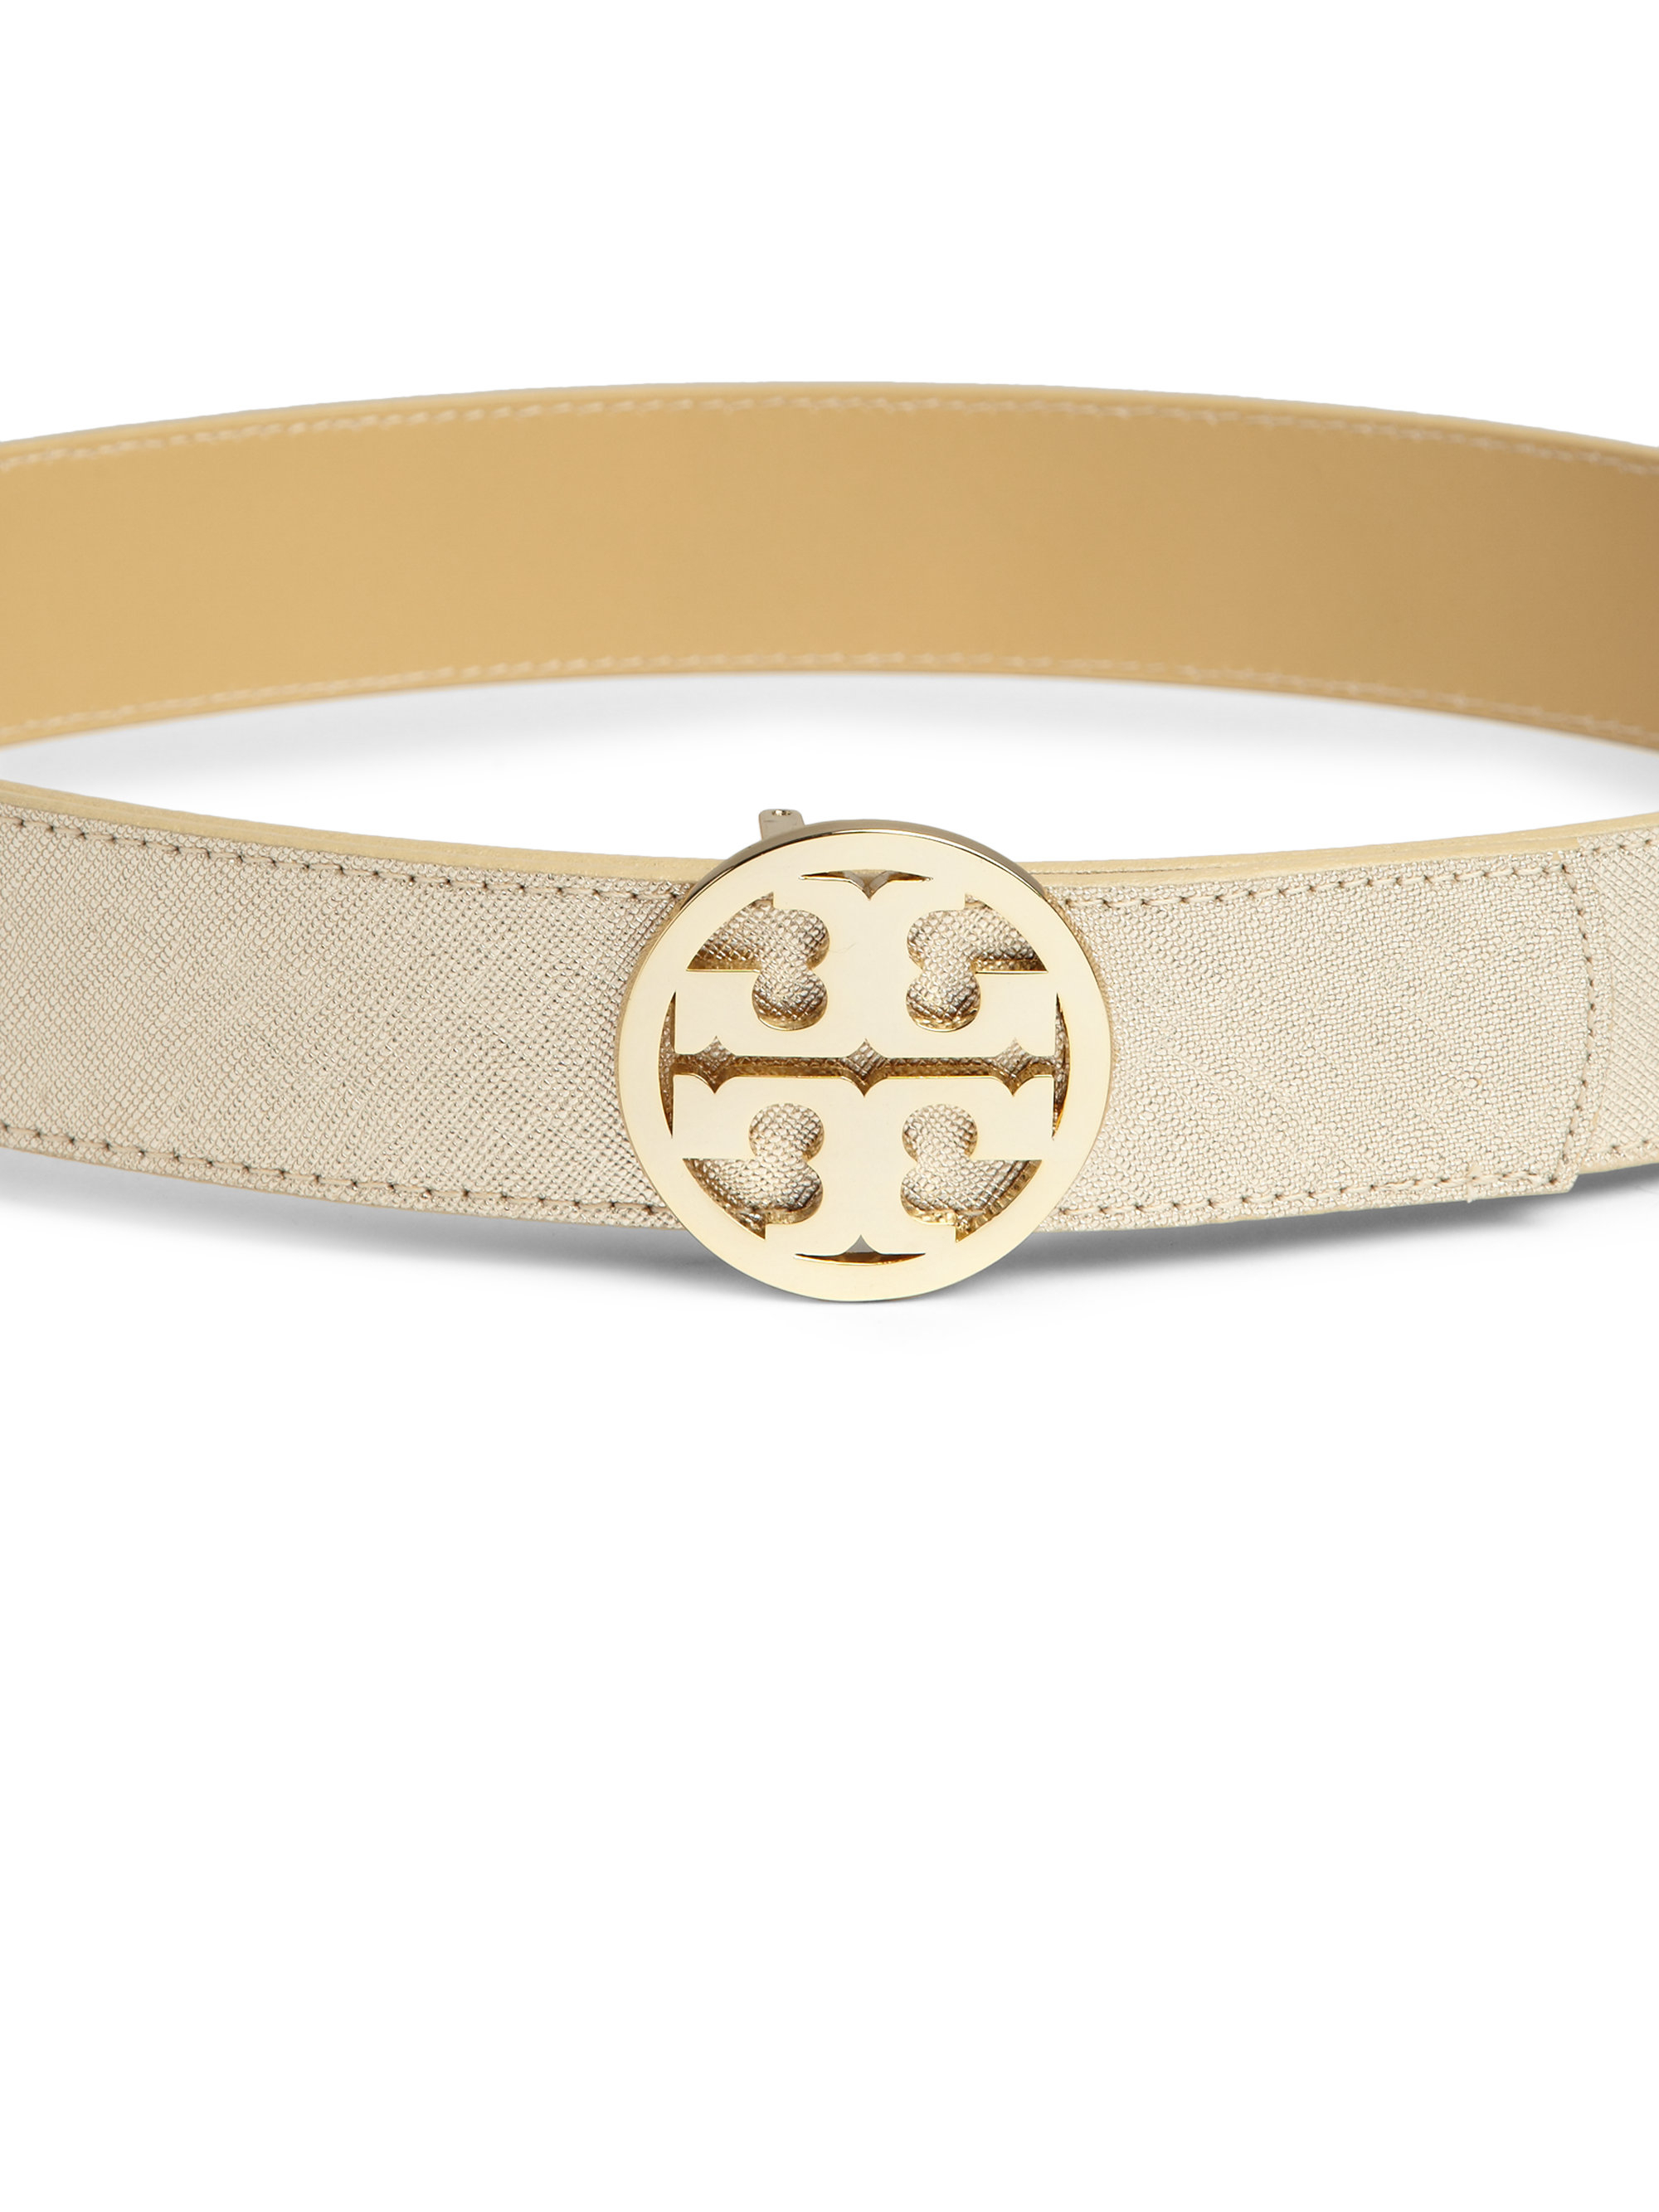 Tory Burch Reversible Logo Leather Belt in Gold (Metallic) | Lyst